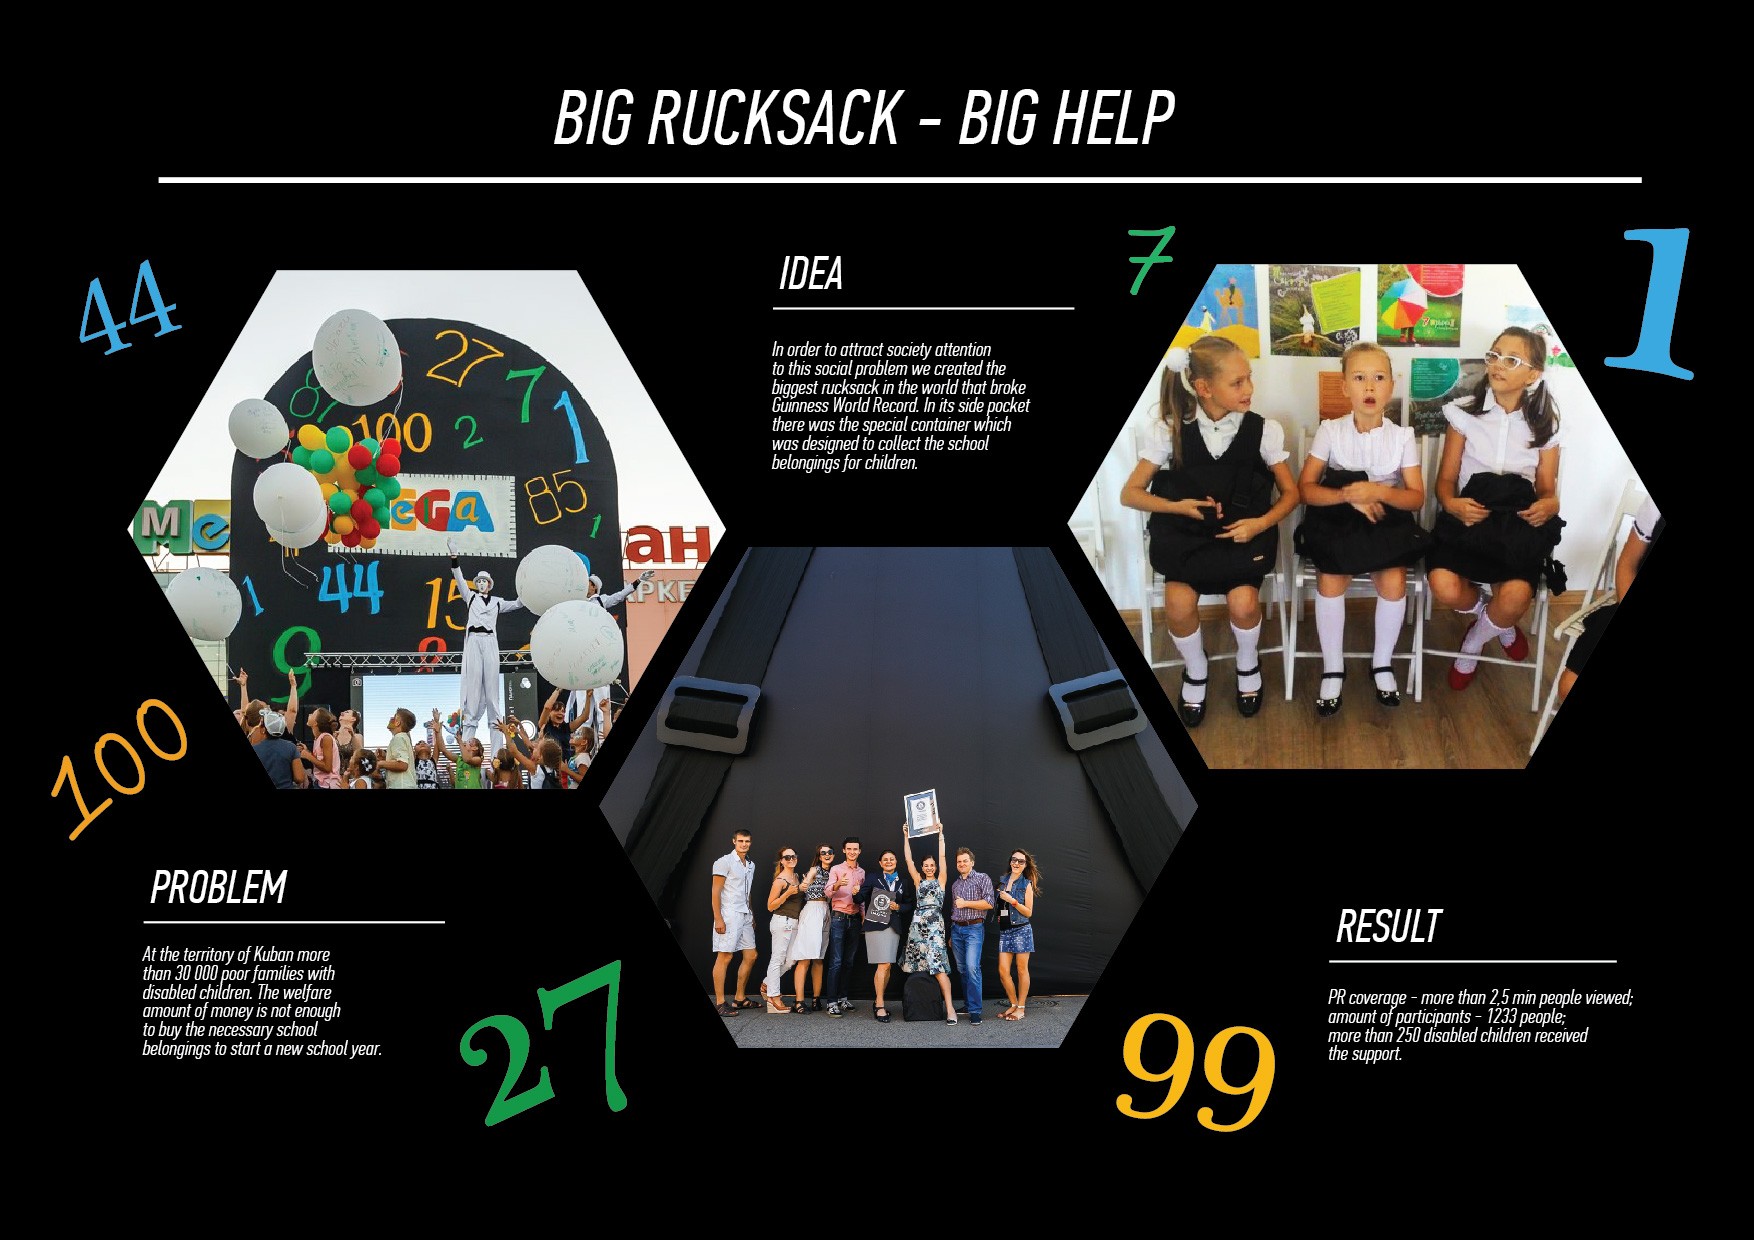 Big rucksack - big help